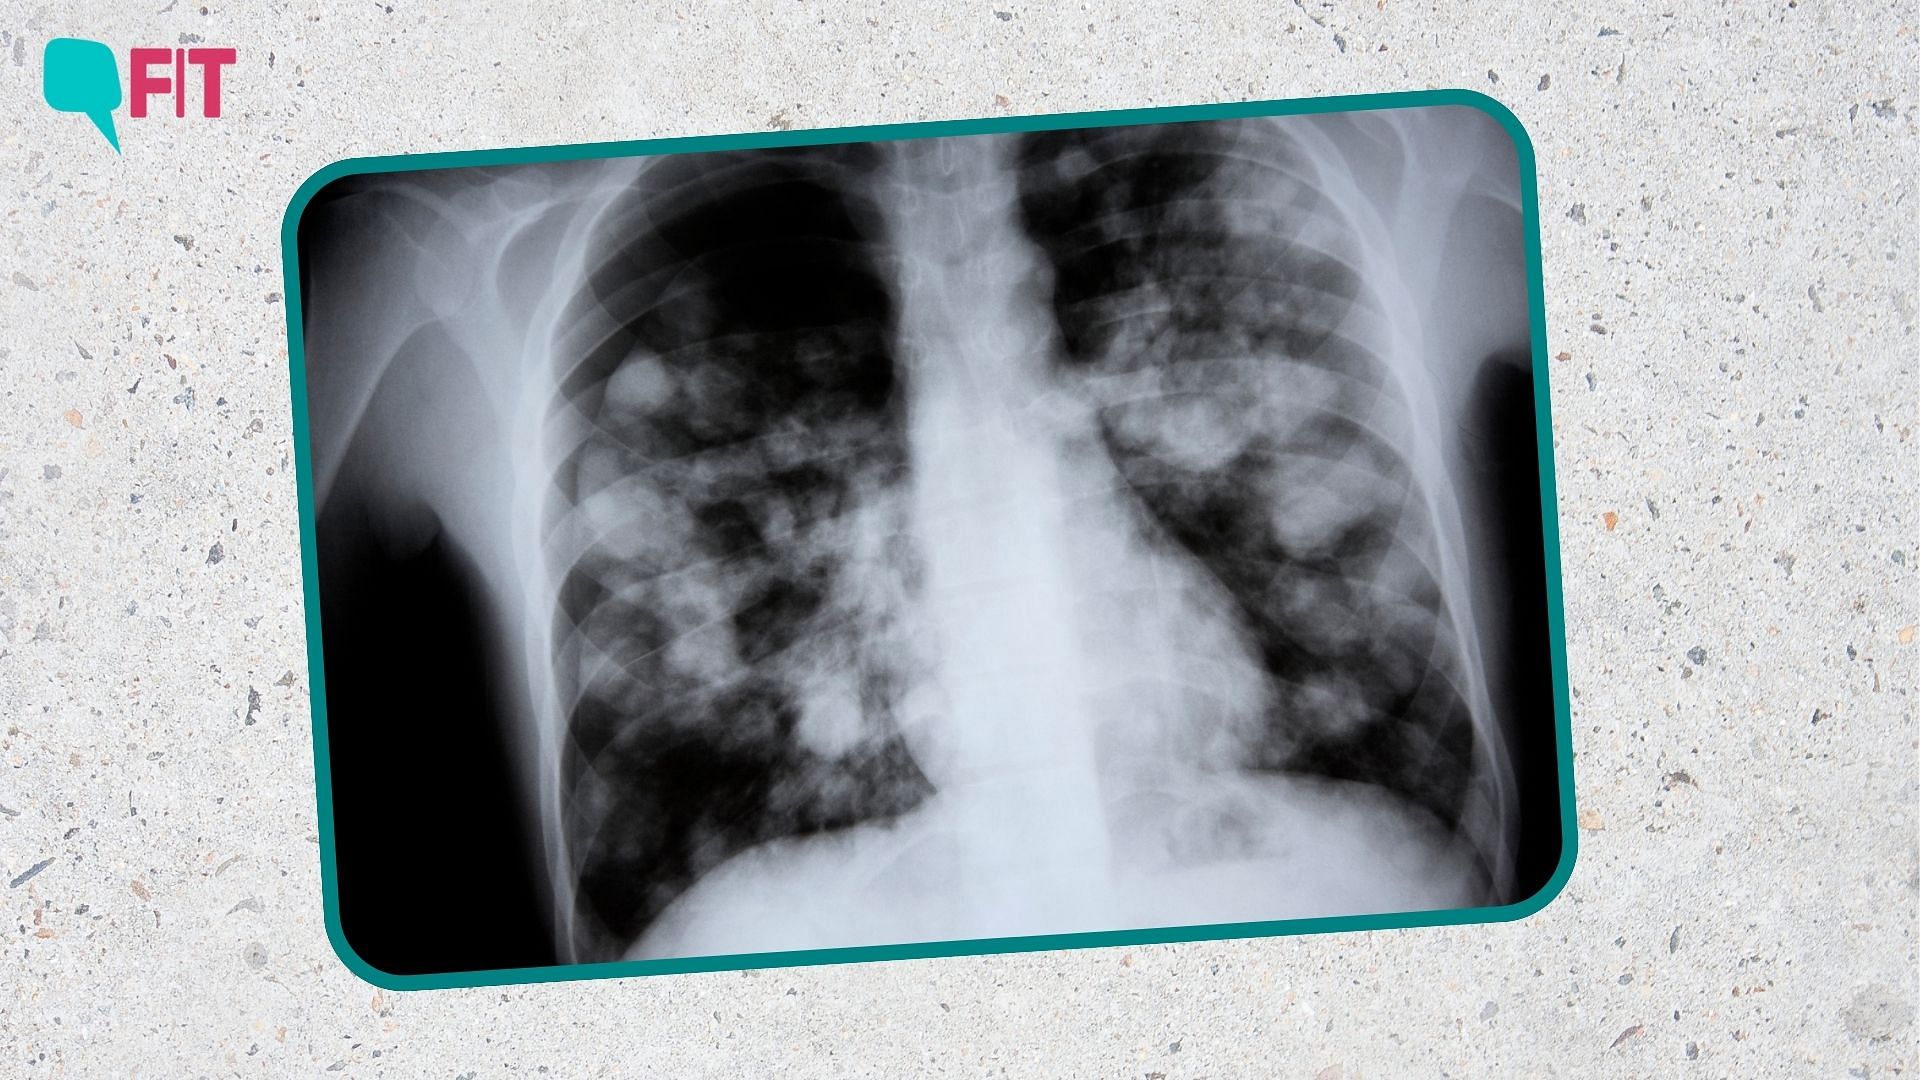 <div class="paragraphs"><p>White Lung PneumoniaL Symptoms, treatment (Image is for representational purpose only)</p></div>